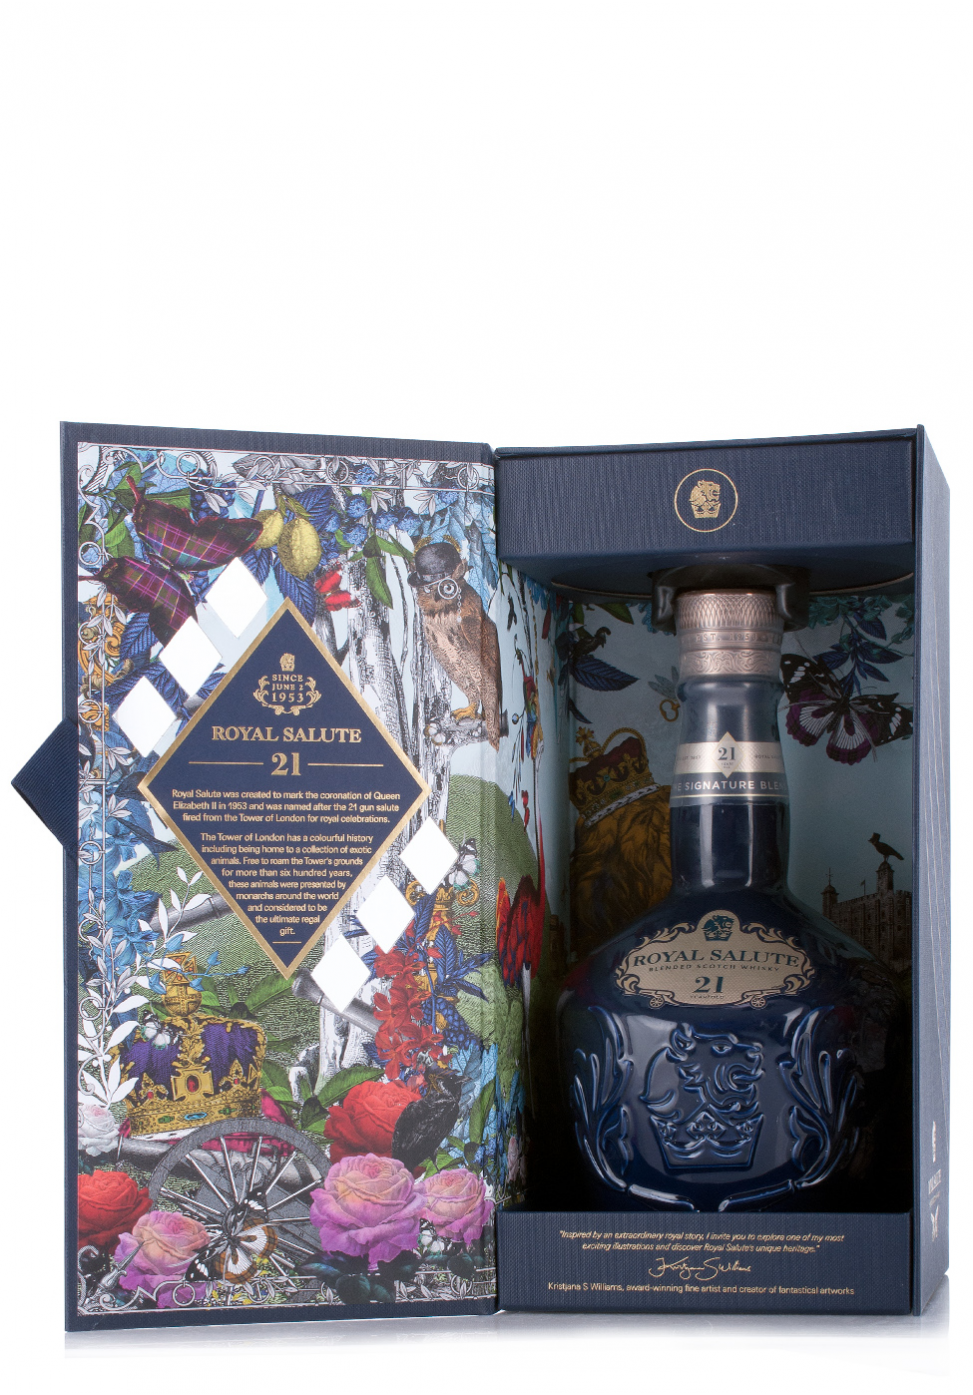 Whisky Chivas Royal Salute 21 ani, The Sapphire Flagon (0.7L) Image